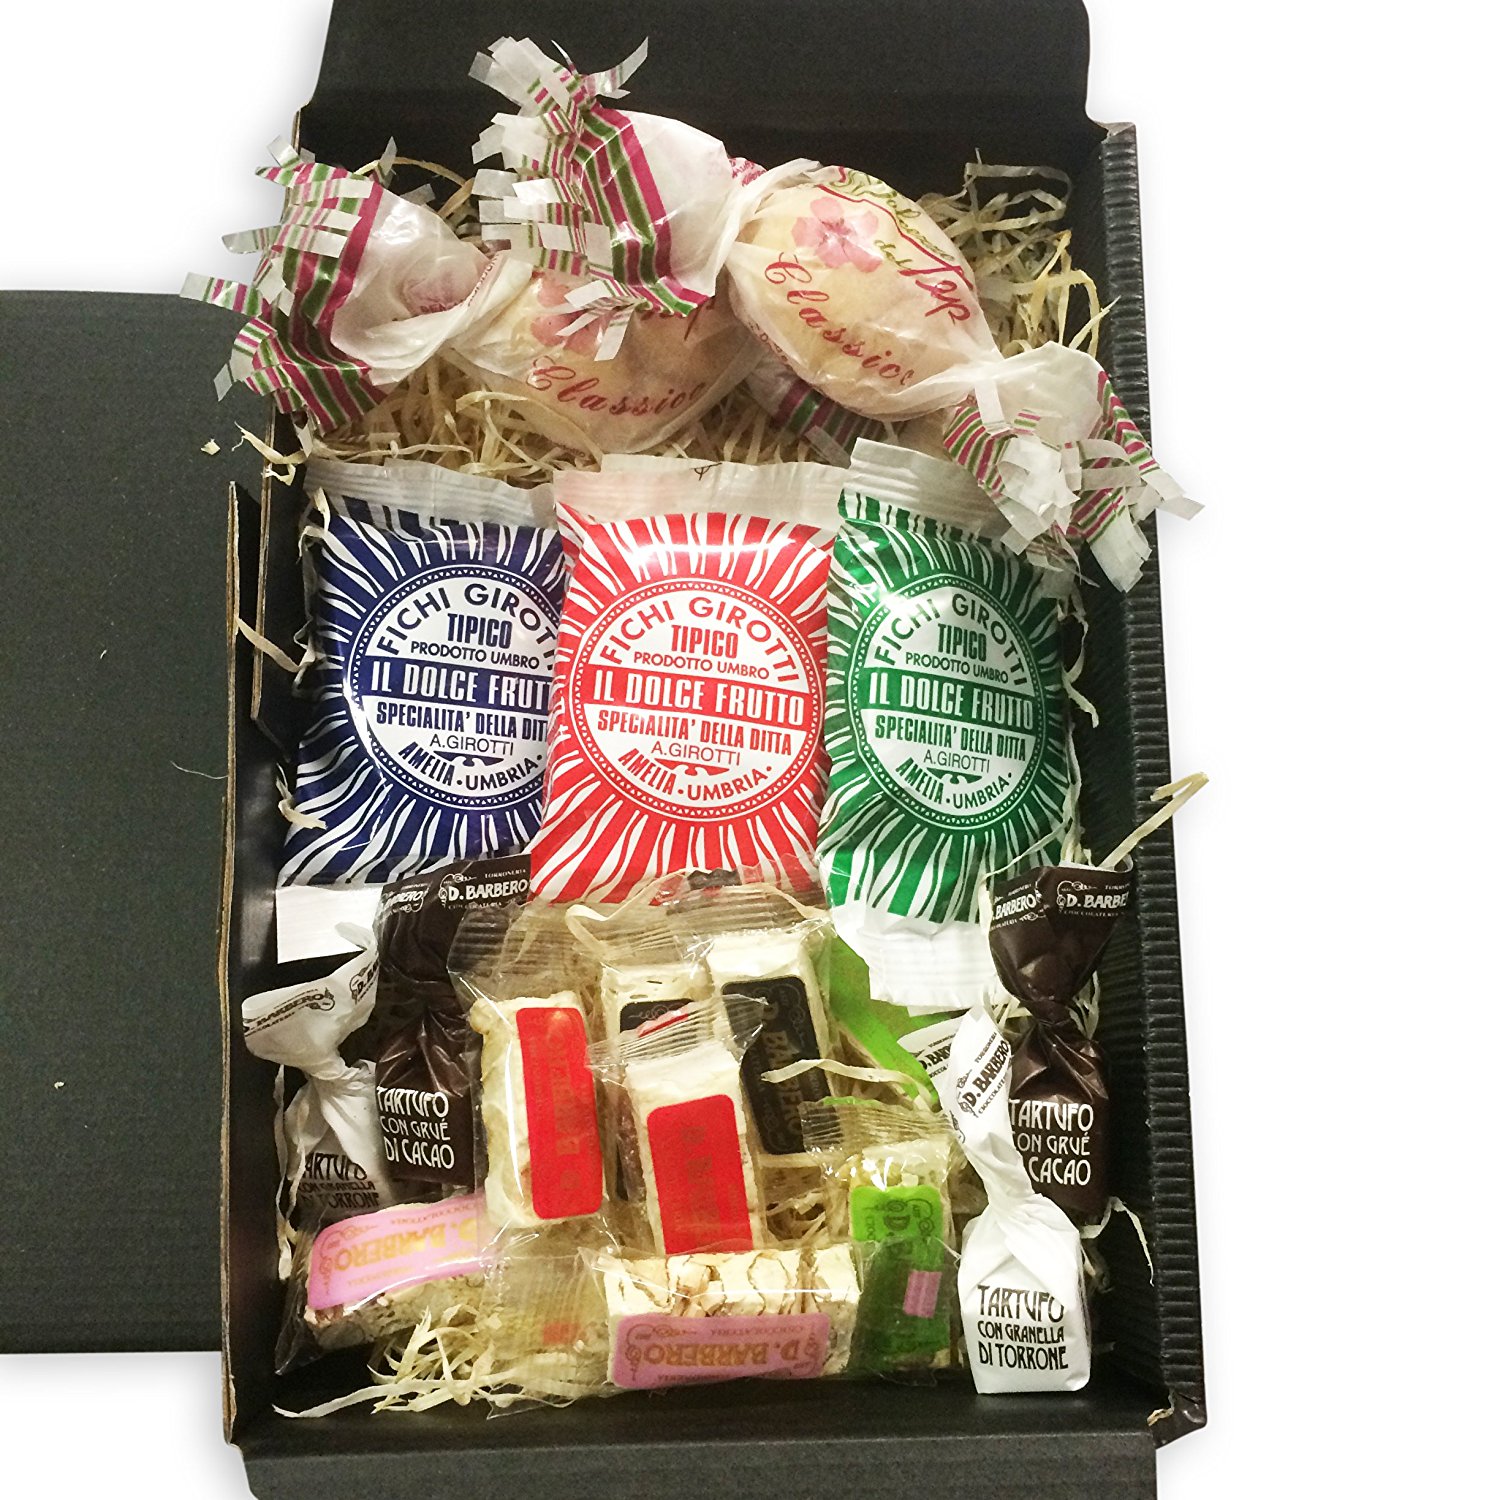 Süßes Geschenkset "Dolce Deluxe" mit exklusiven italienischen Süßwaren